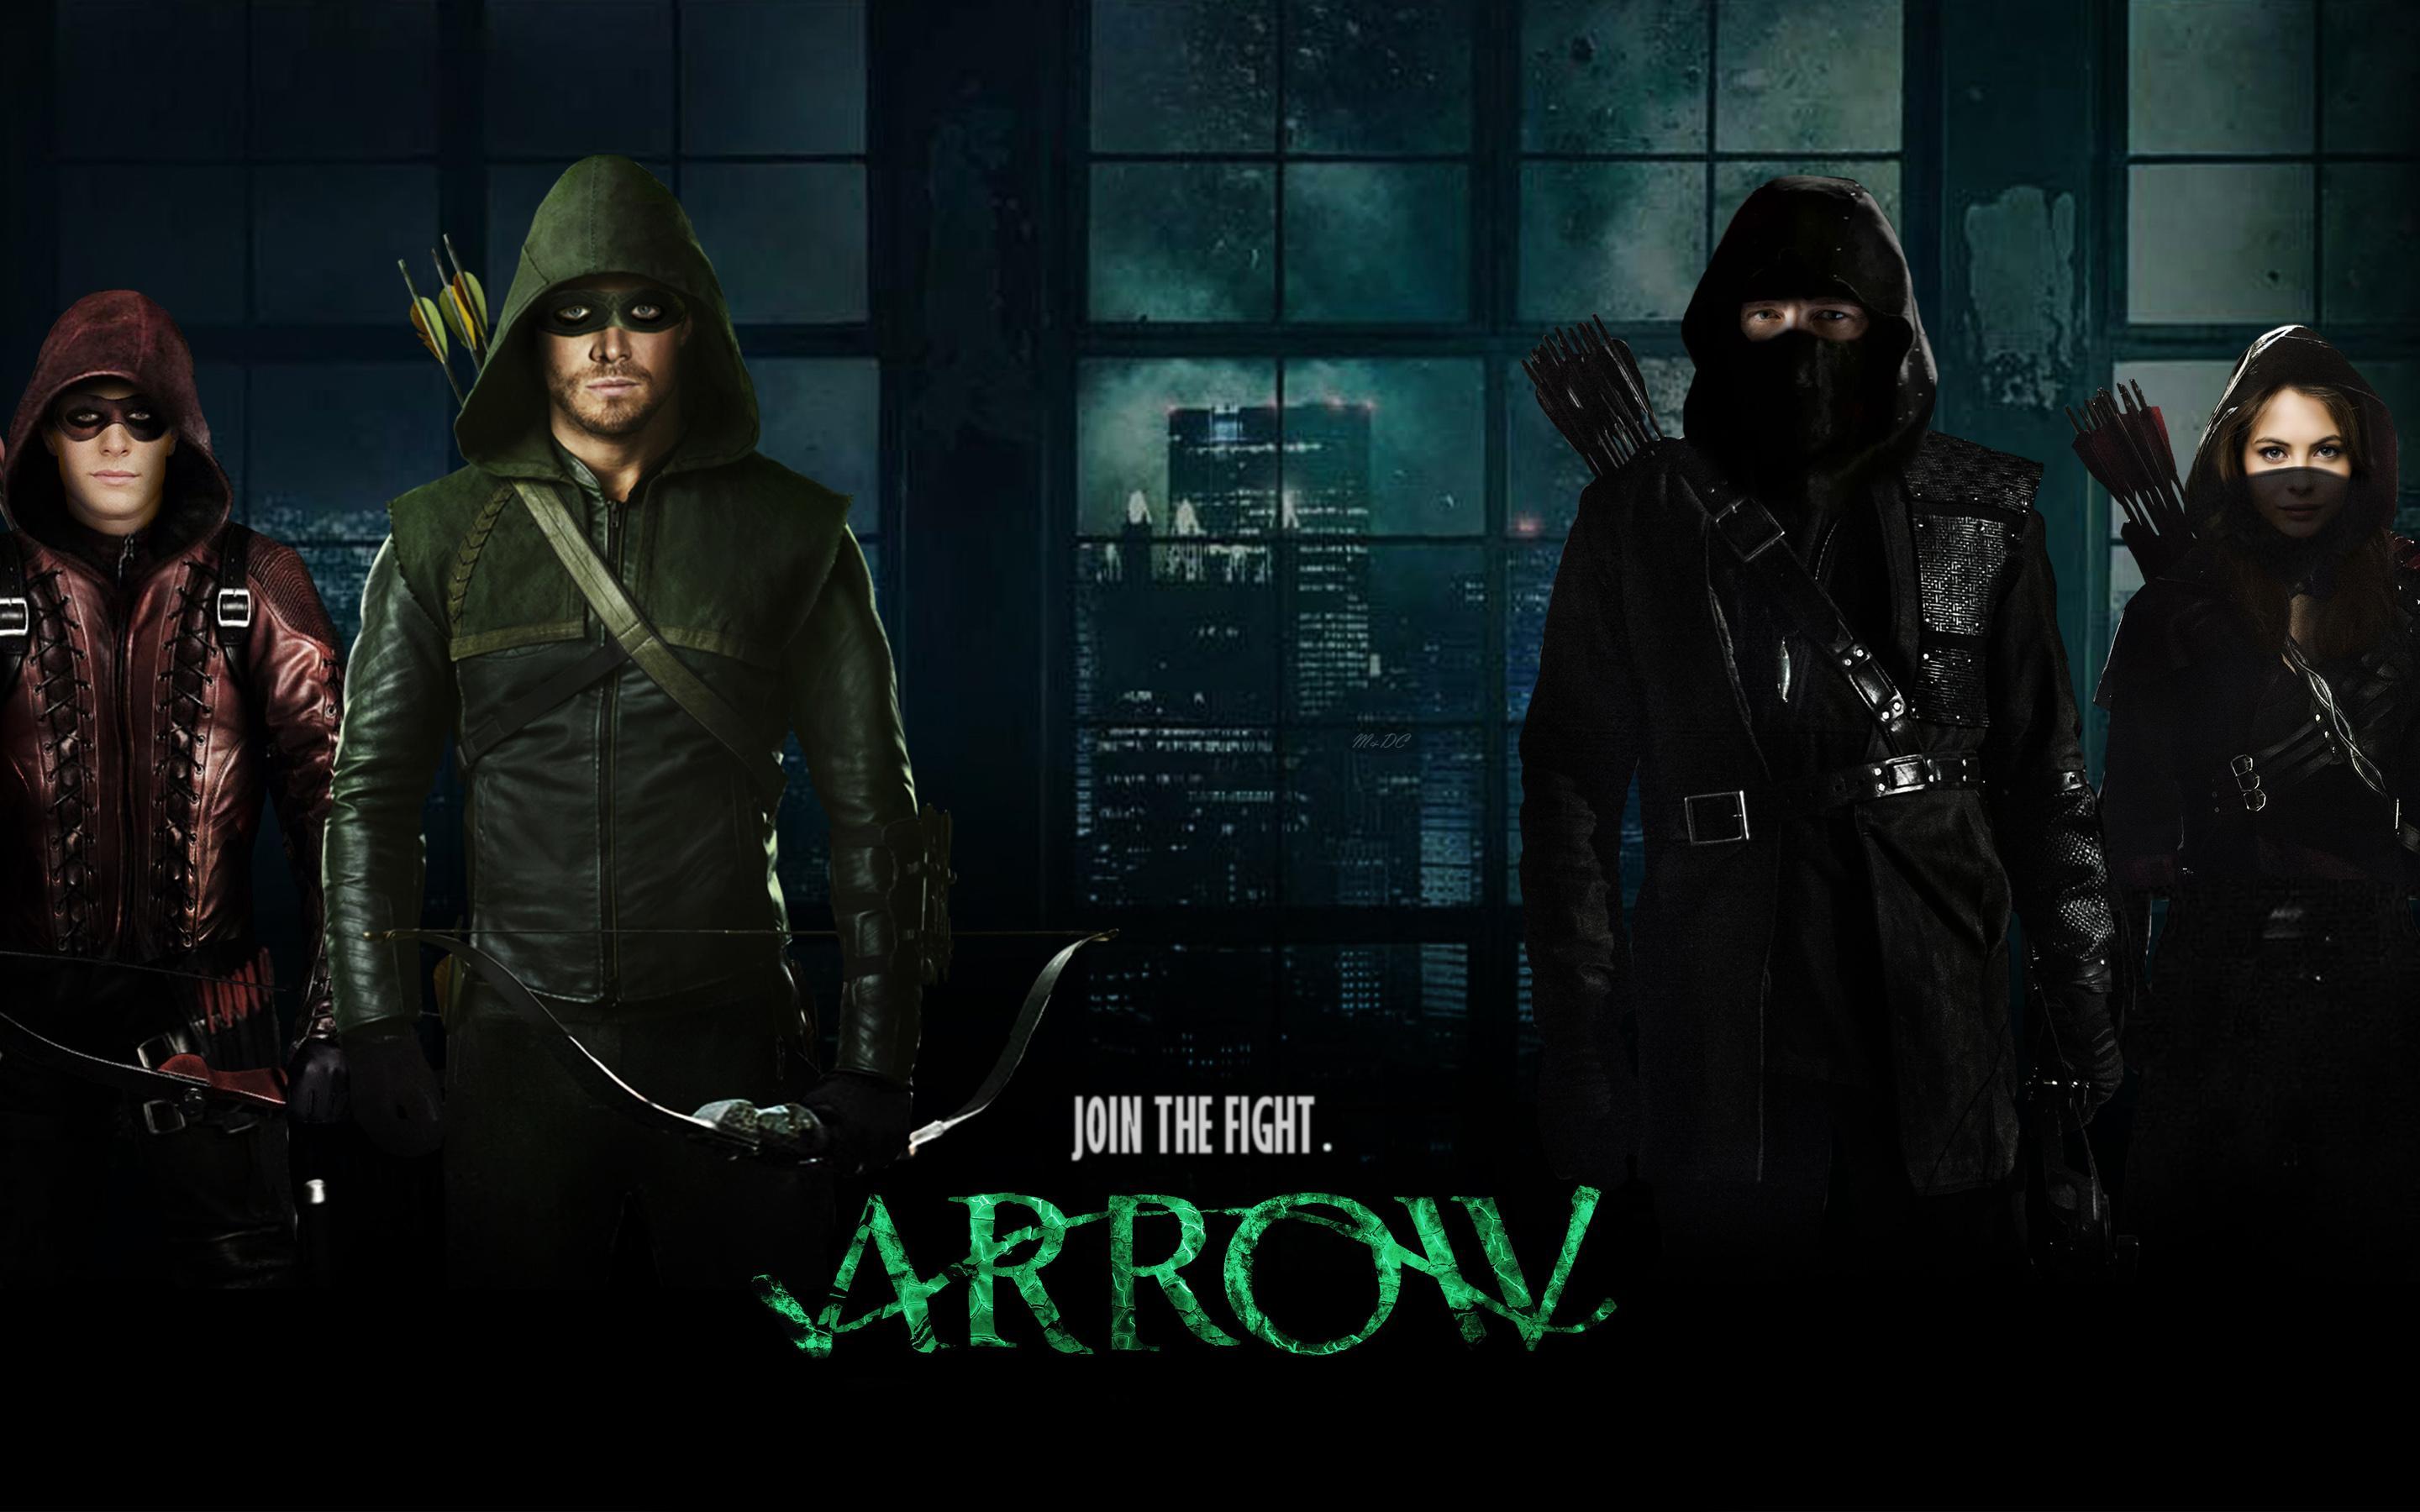 Arrow Season 3 2014 HD desktop wallpapers : Widescreen : High